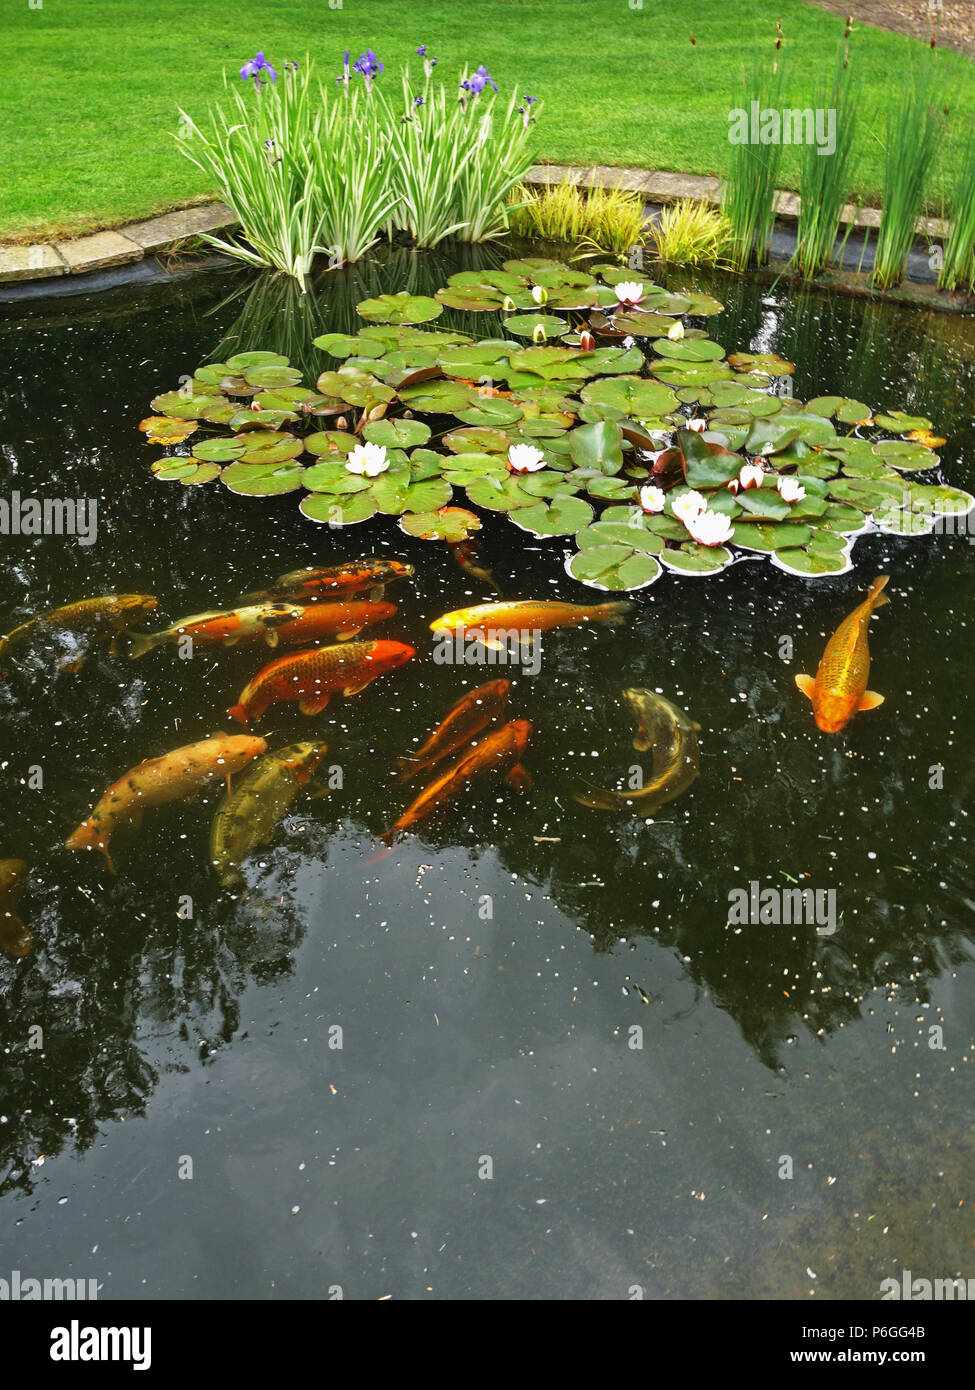 https://c8.alamy.com/comp/P6GG4B/fishpond-with-various-medium-sized-garden-pond-fish-P6GG4B.jpg